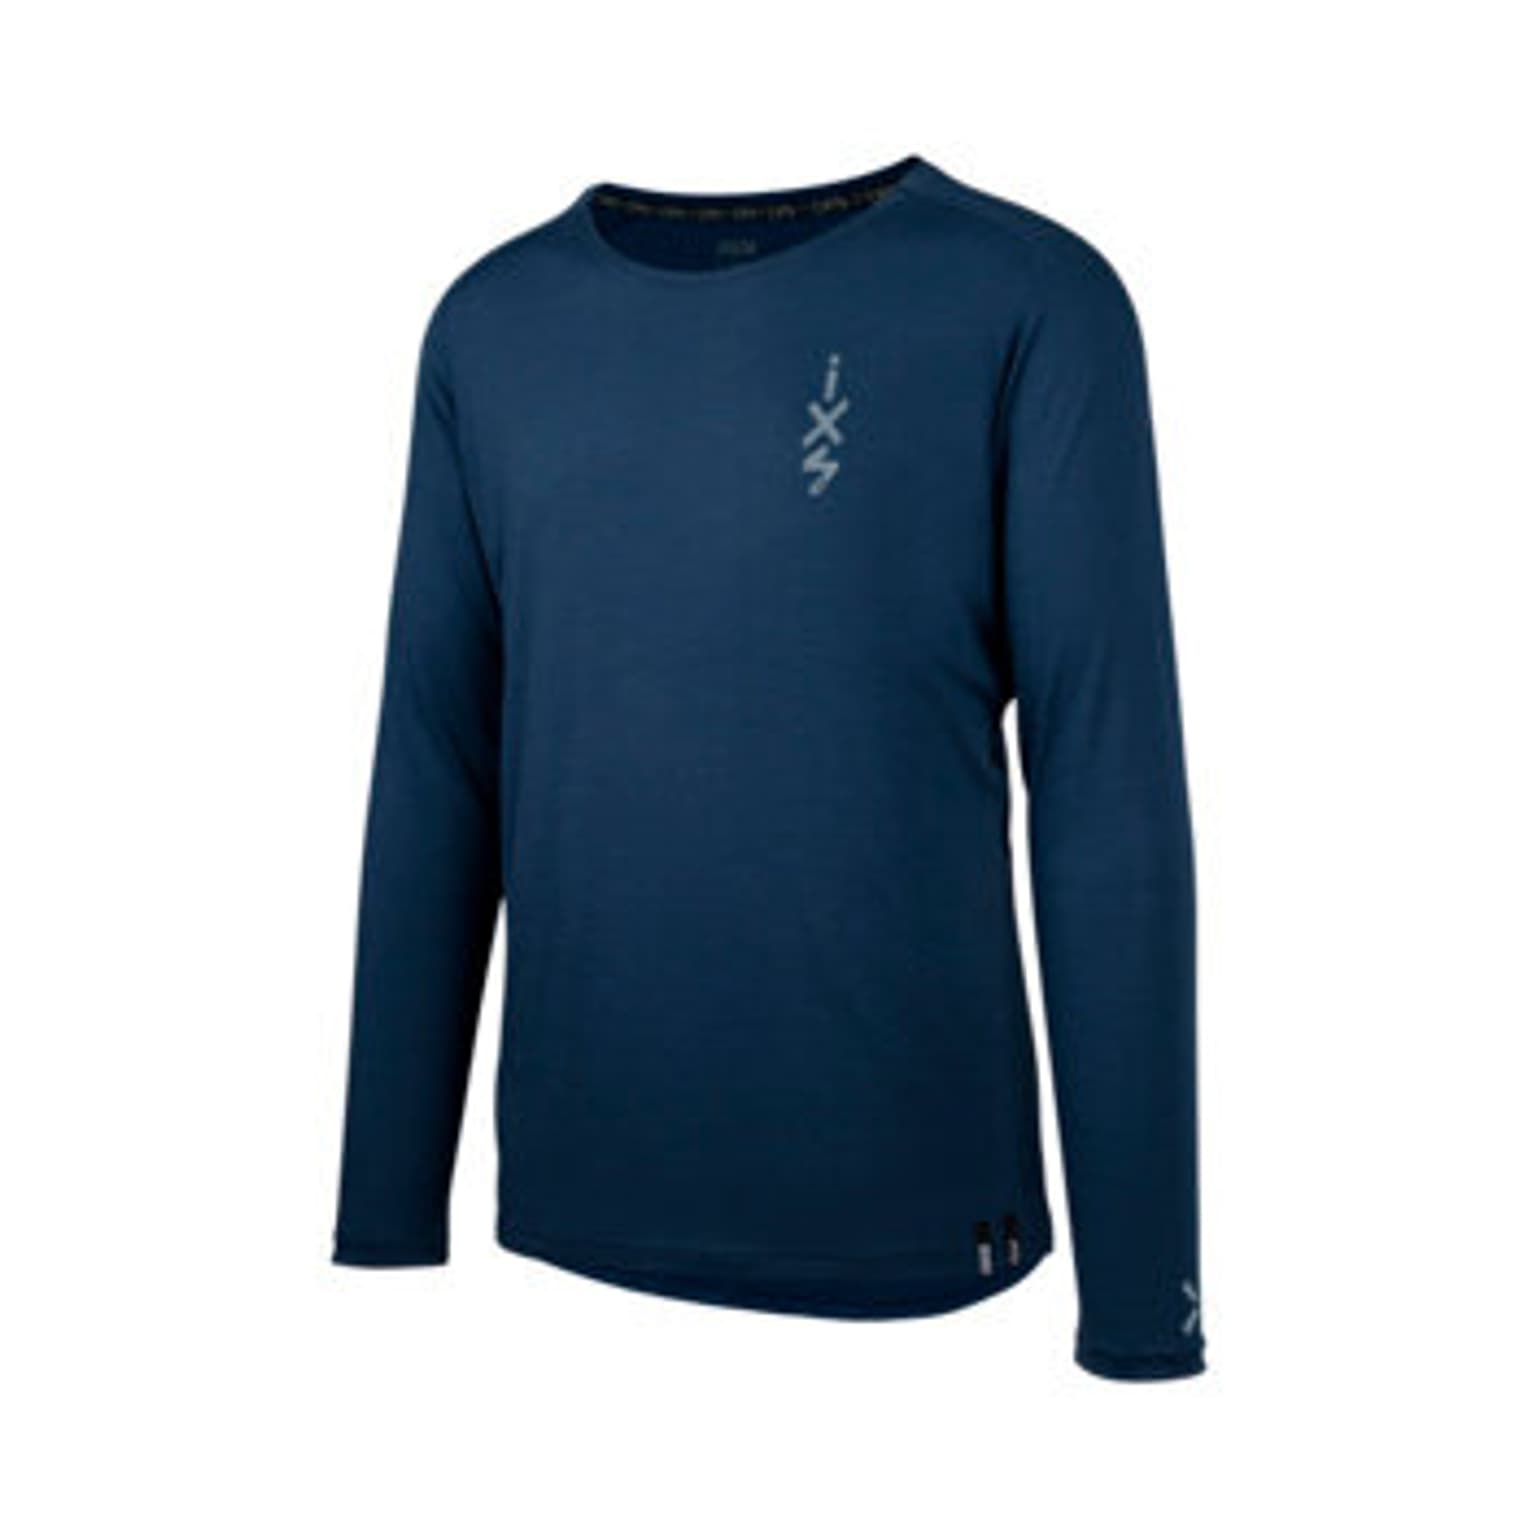 iXS iXS Flow Merino long sleeve jersey Maglia a maniche lunghe blu-marino 1